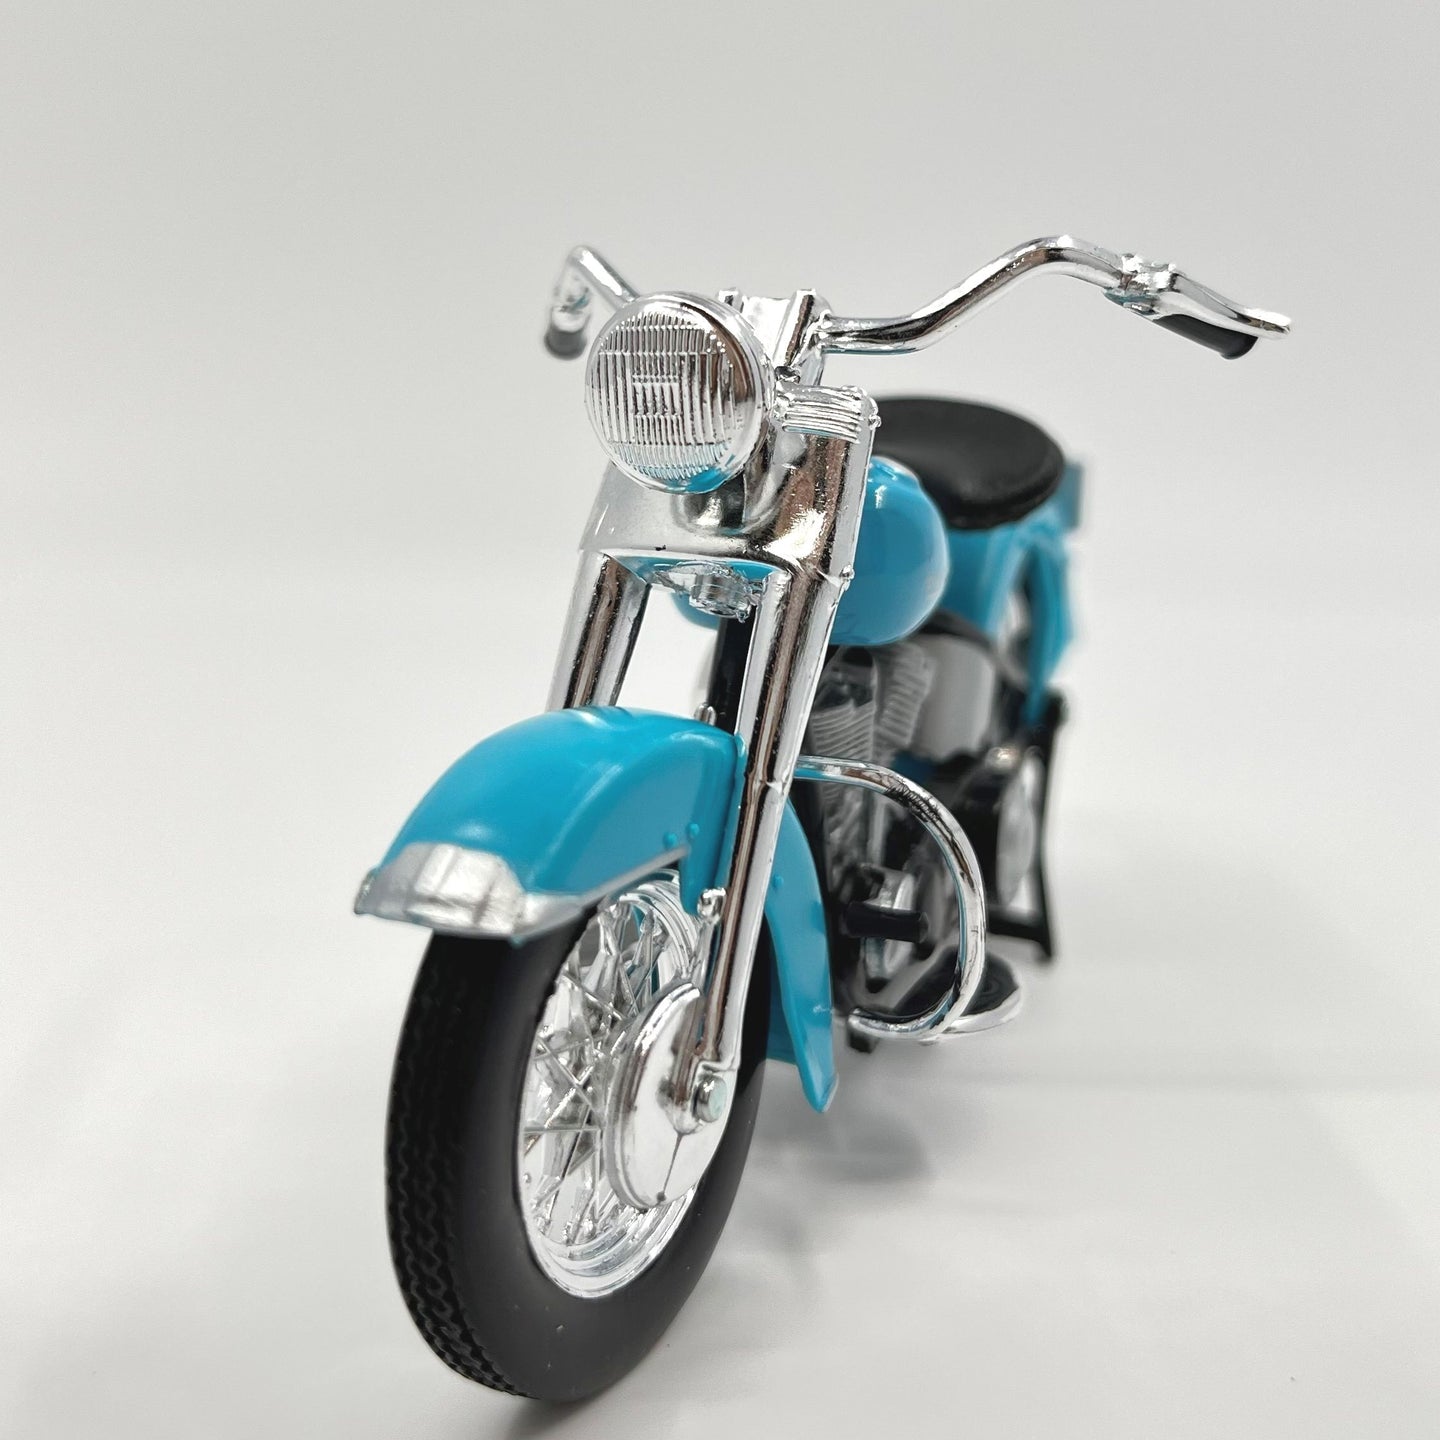 1953 Harley Davidson 74FL Hydra Glide Diecast Bike 1:18 Motorcycle Model By Maisto